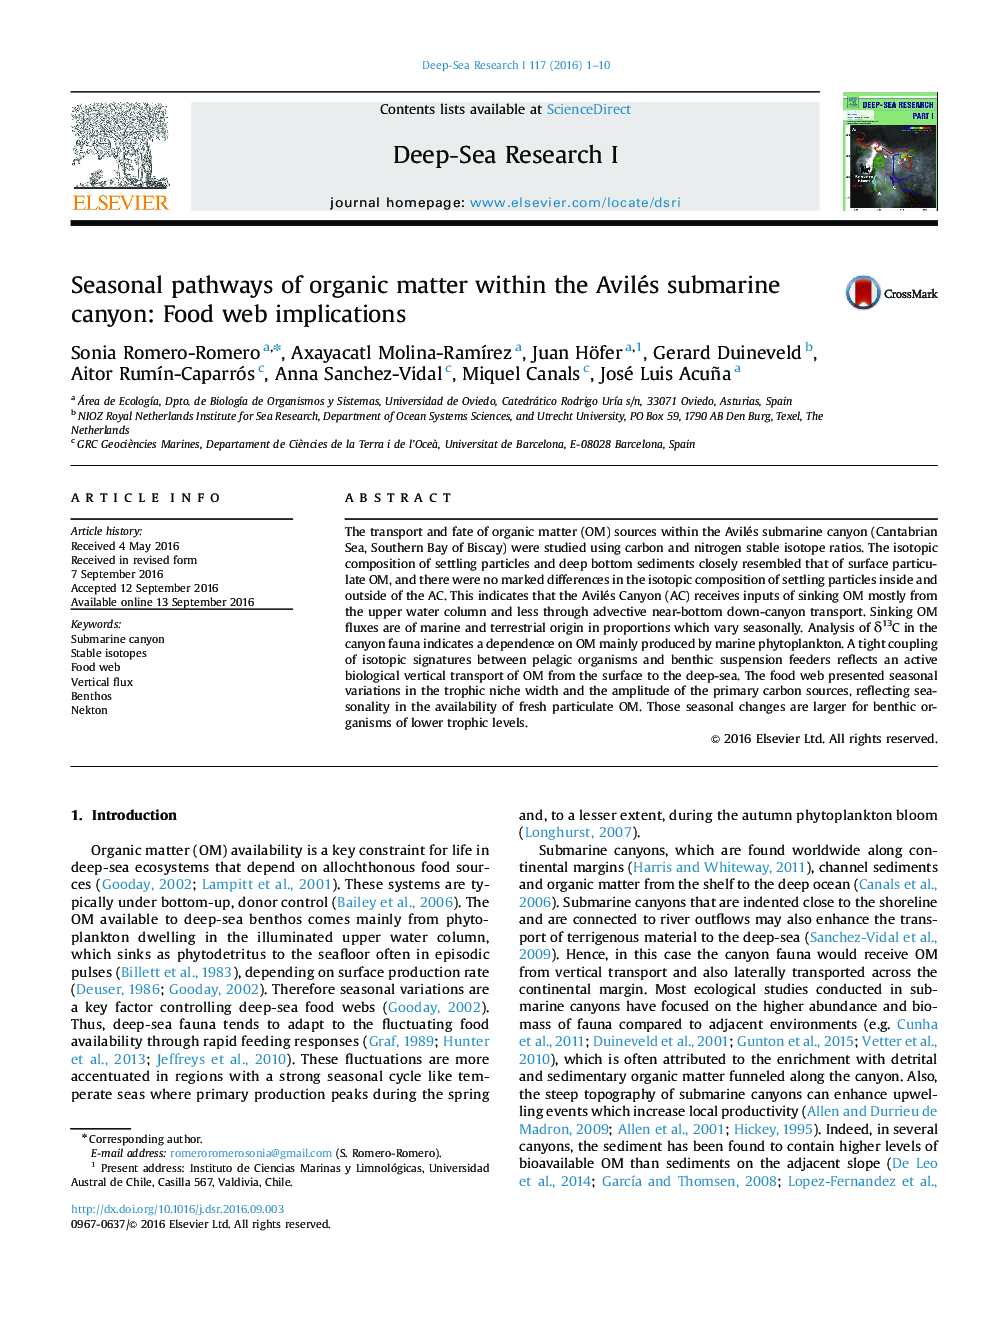 Seasonal pathways of organic matter within the Avilés submarine canyon: Food web implications